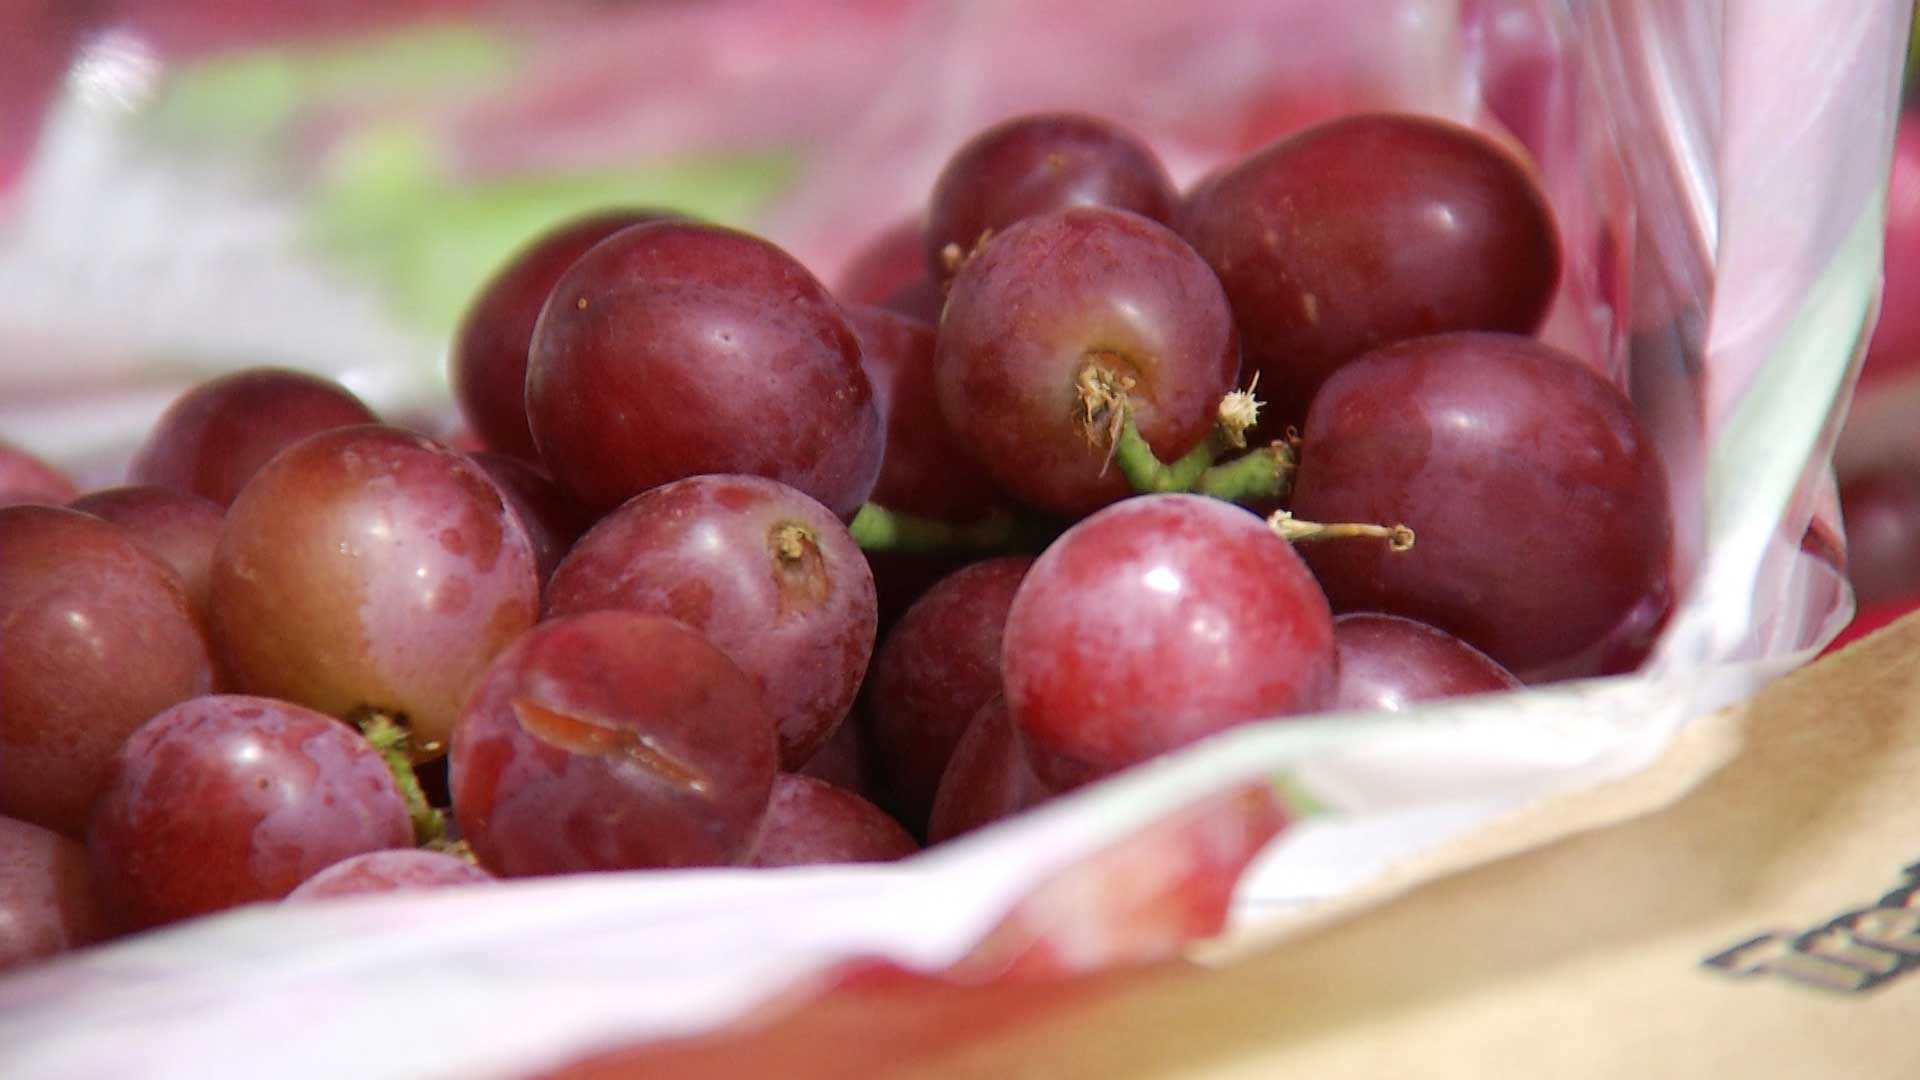 grapes border